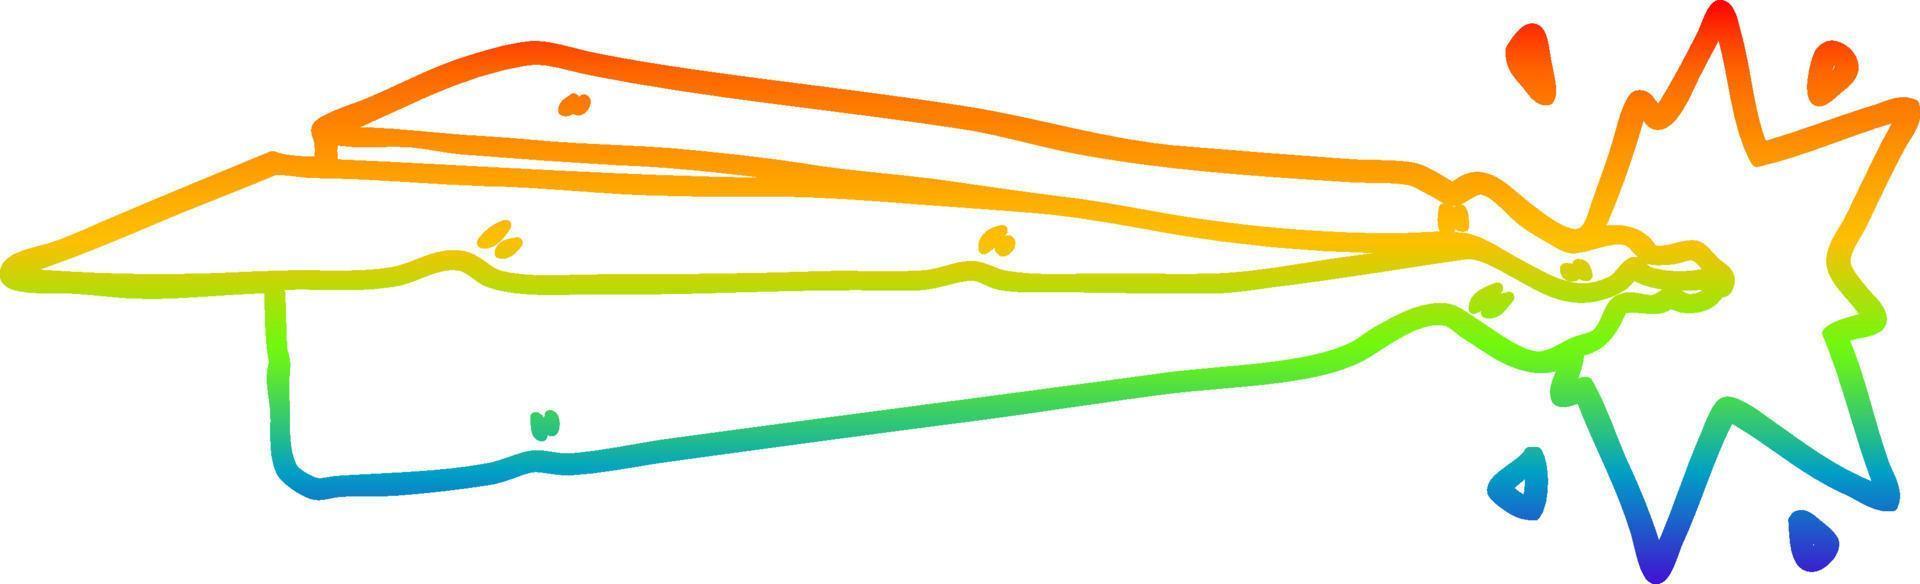 rainbow gradient line drawing cartoon paper airplane vector